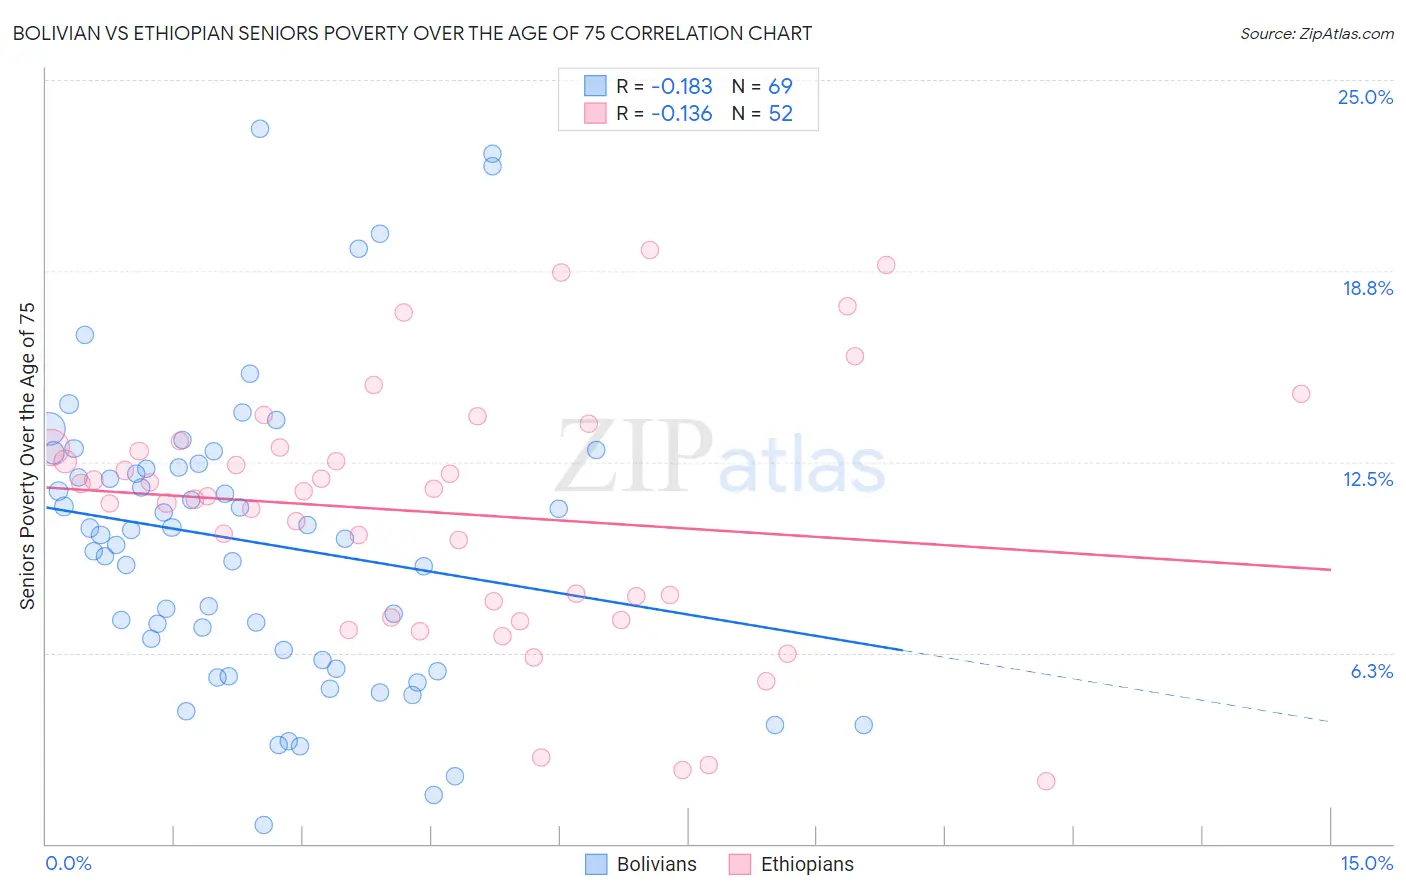 Bolivian vs Ethiopian Seniors Poverty Over the Age of 75